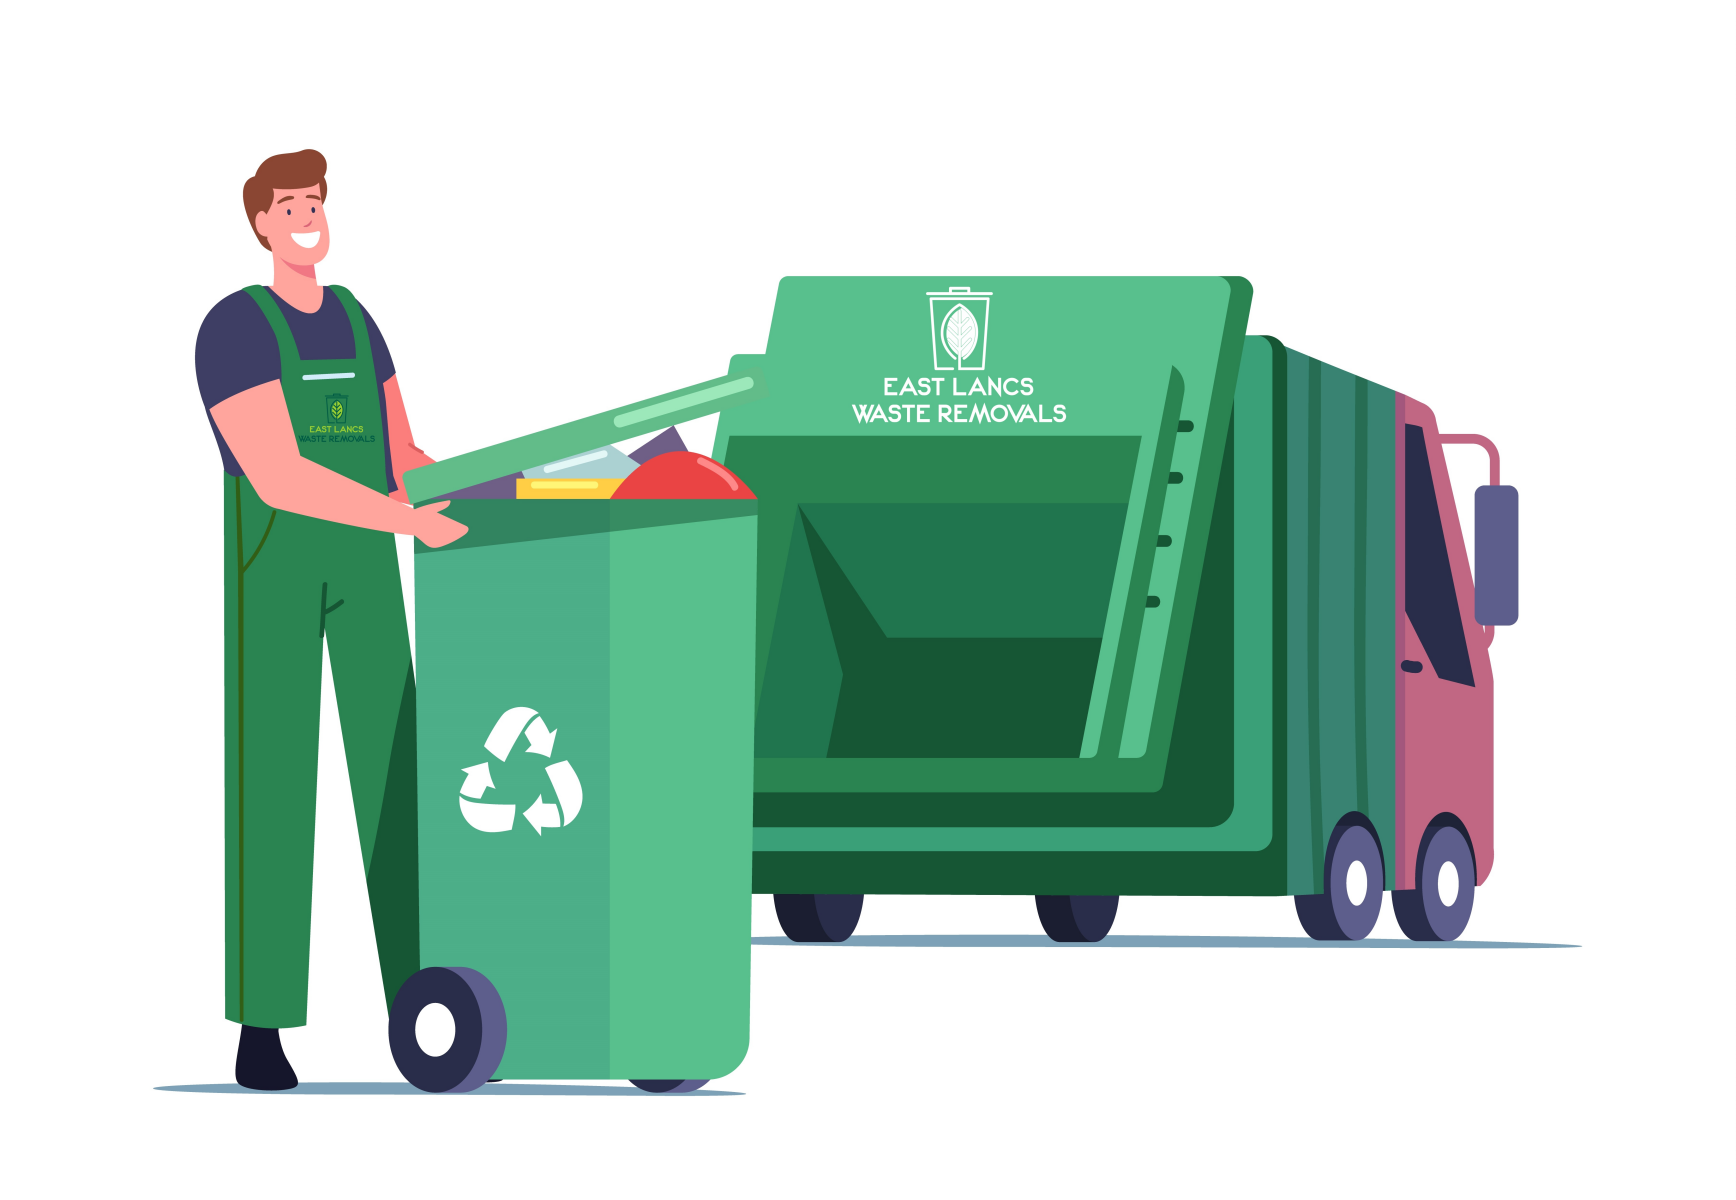 waste clearance birmingham